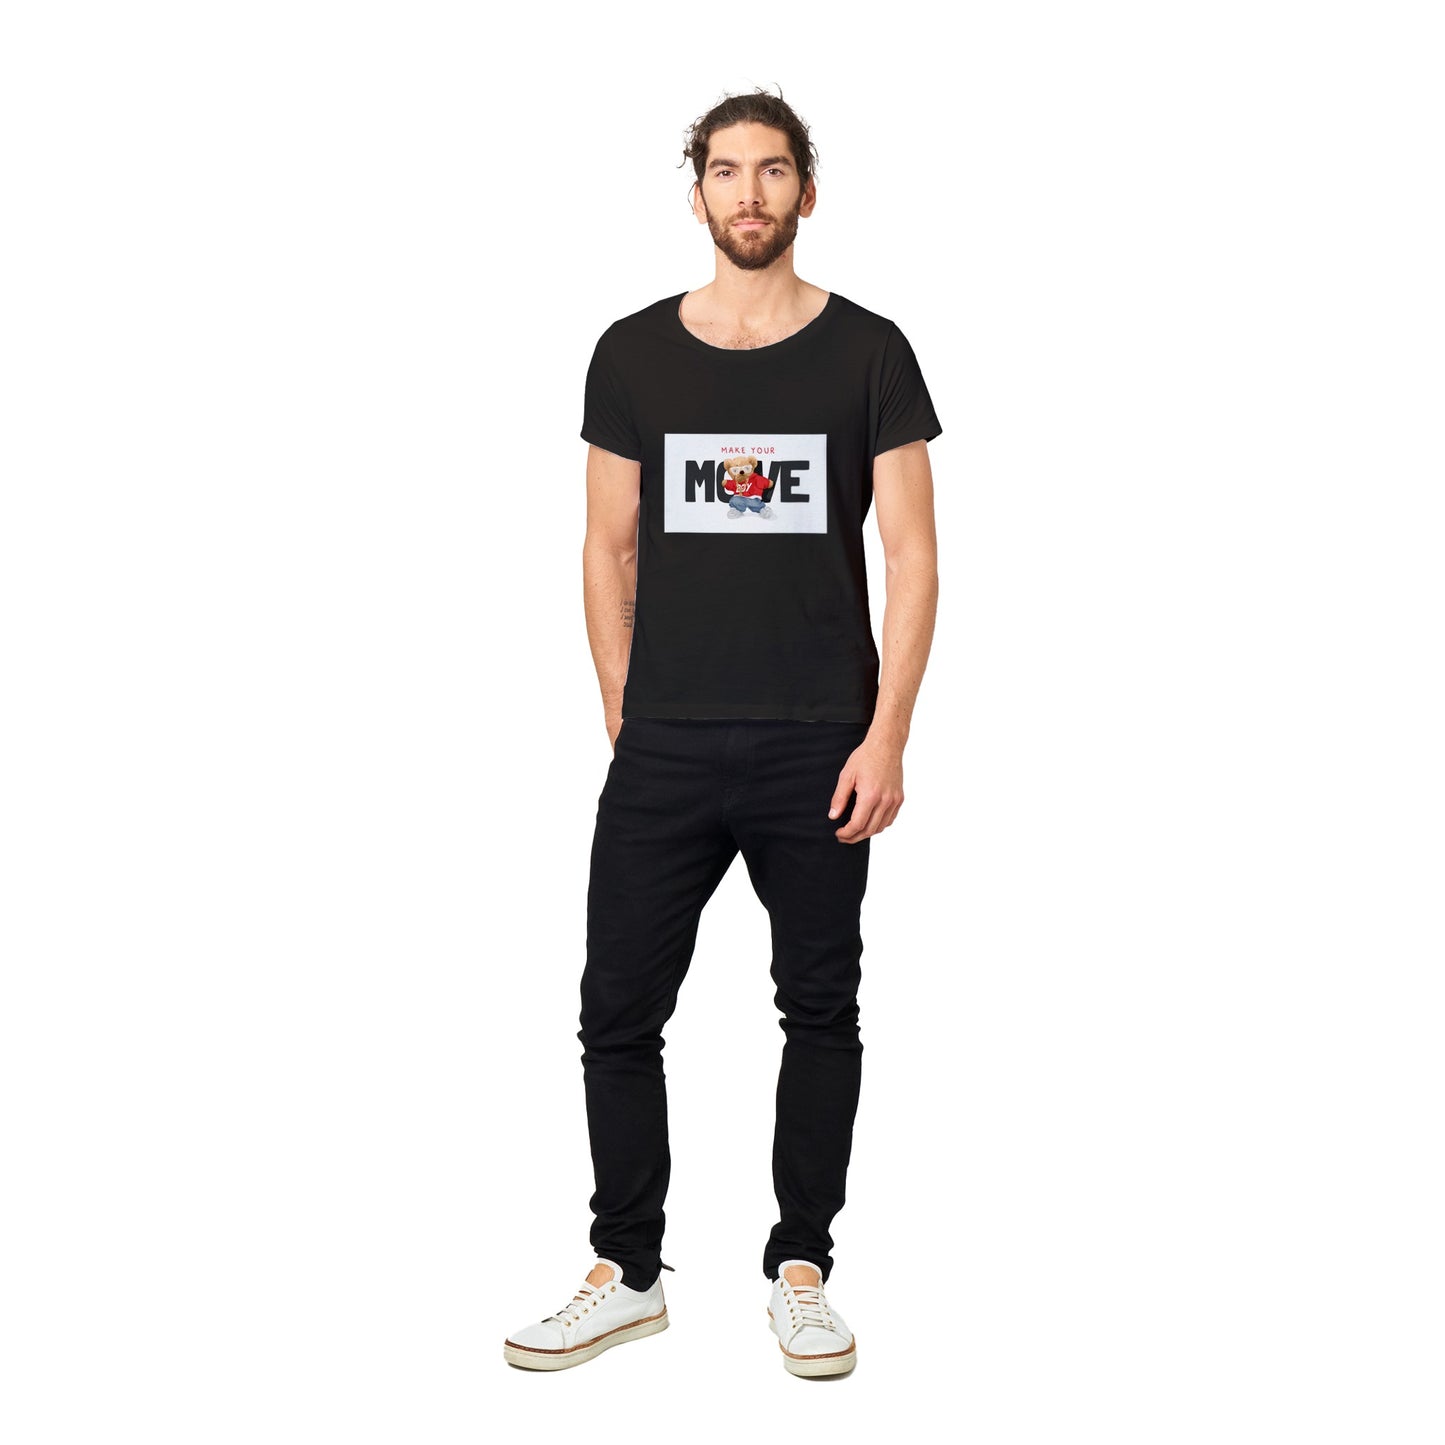 100% Organic Unisex T-shirt/Make-Your-Move